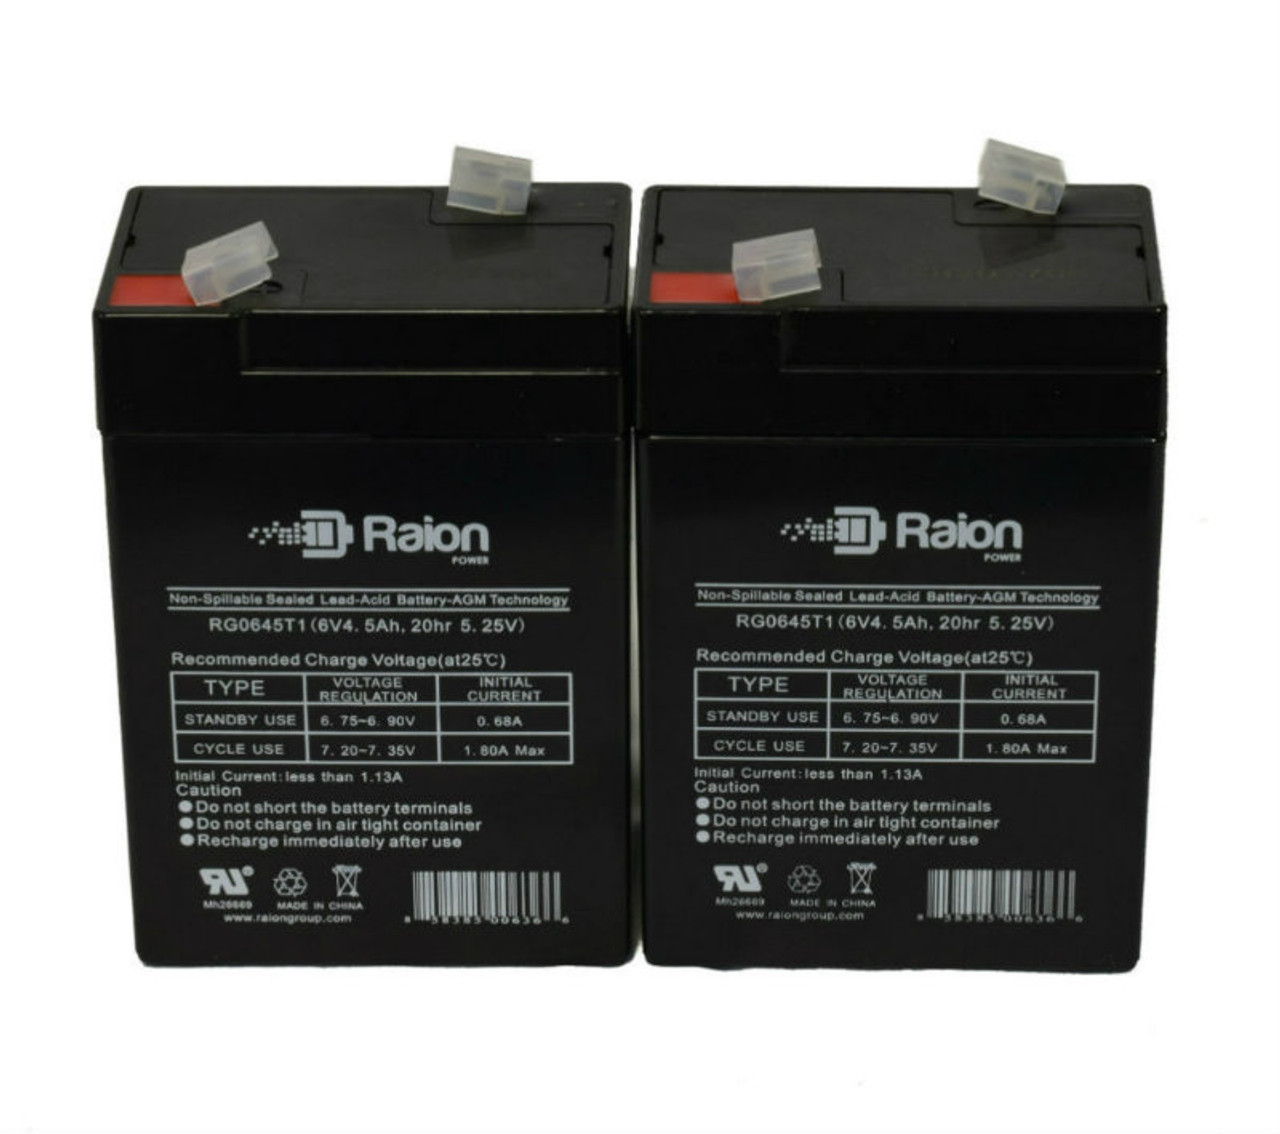 Raion Power 6V 4.5Ah Replacement Emergency Light Battery for Elsar 120 - 2 Pack